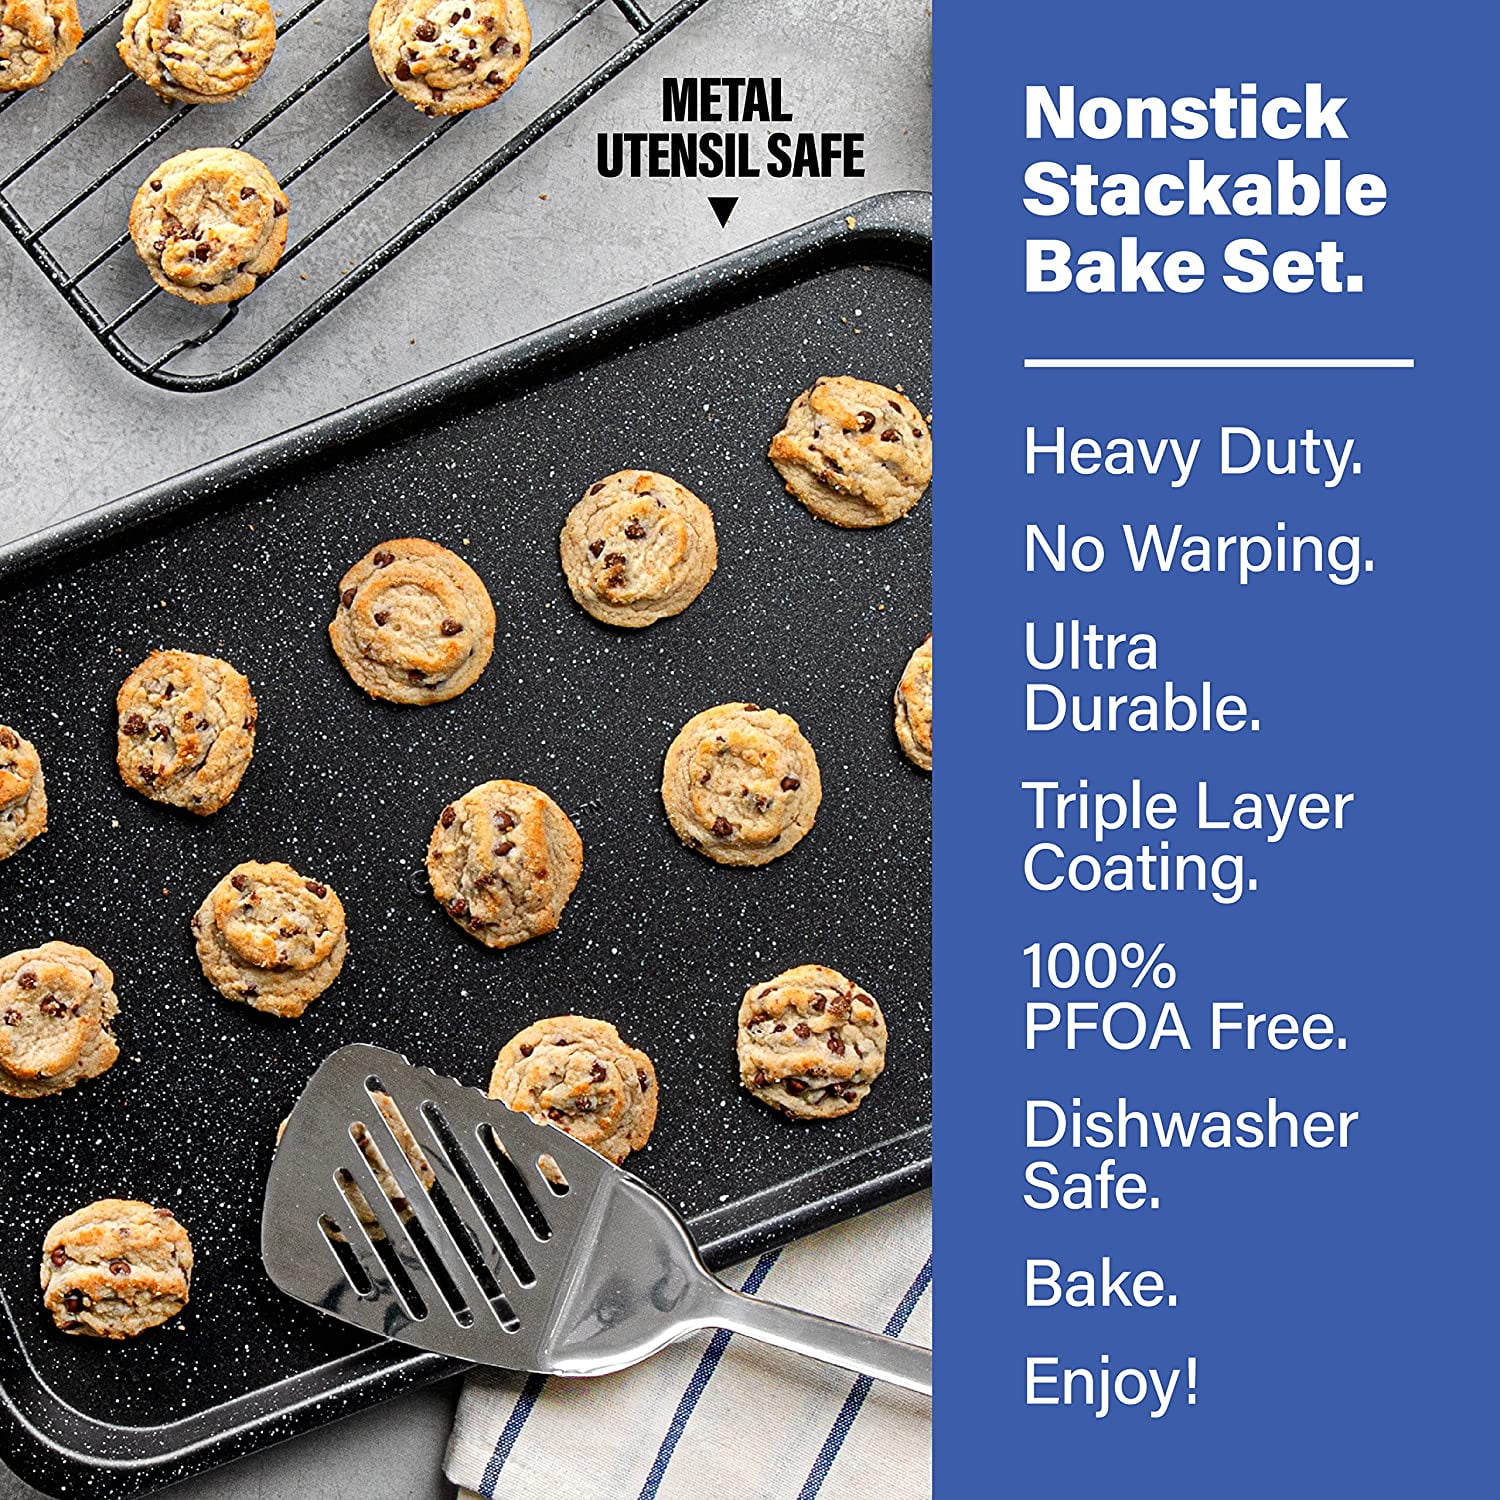 Granitestone Black 6 Pc Stackable Nonstick Bakeware Set With Oven Pans,  Baking Sheet, Wire Rack - Complete Kitchen Baking Set, Oven/Dishwasher  Safe